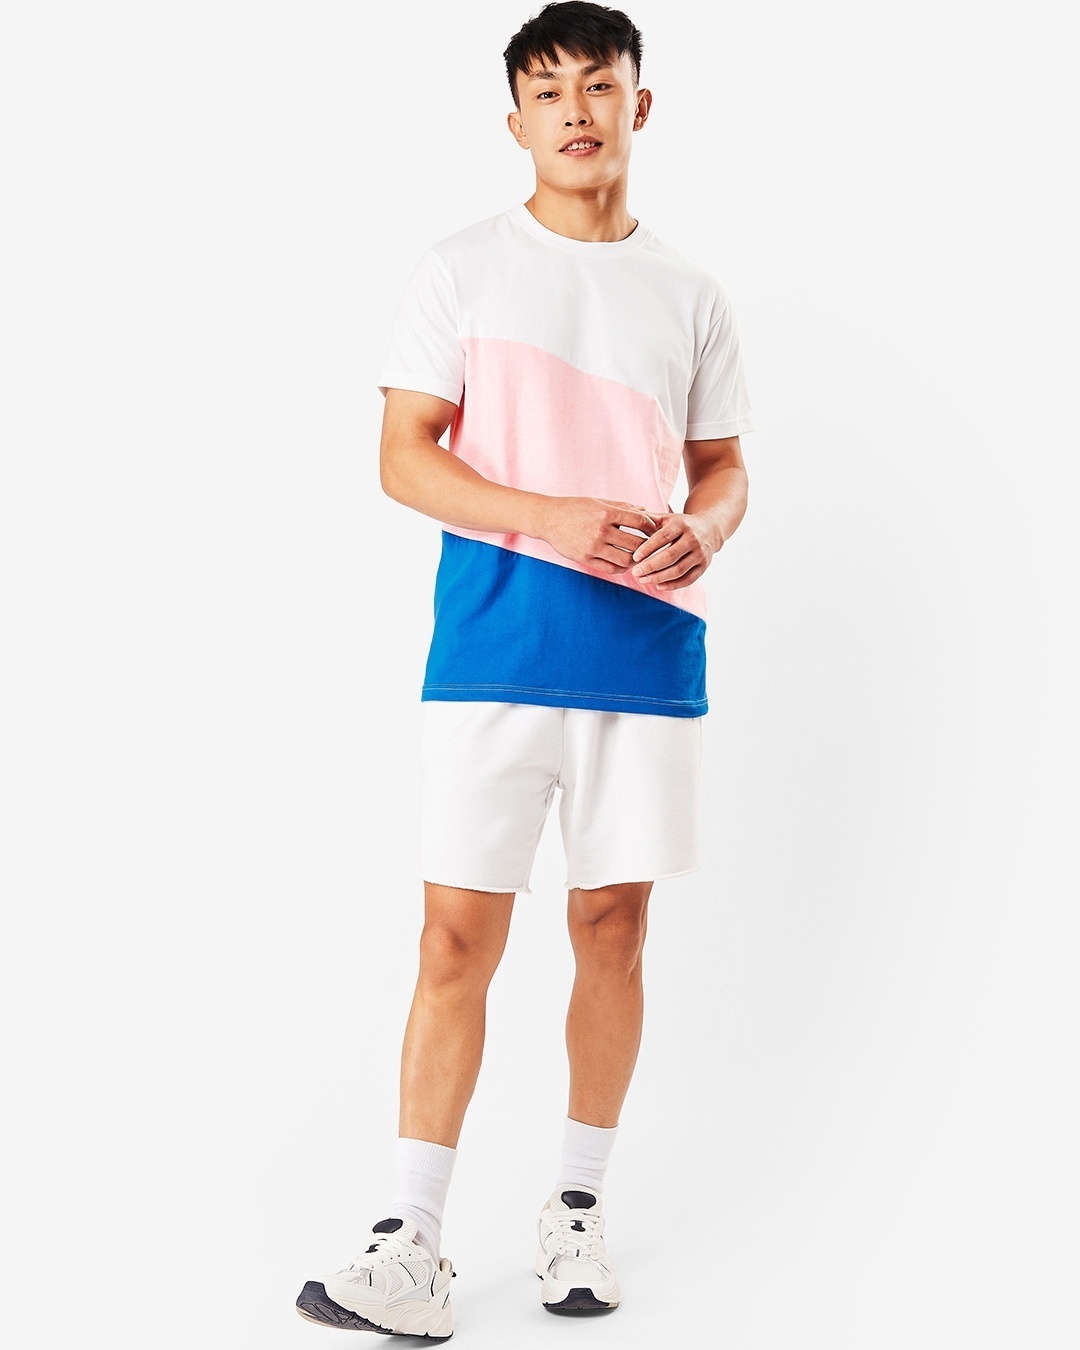 Men's Bright White Color Block T-shirt